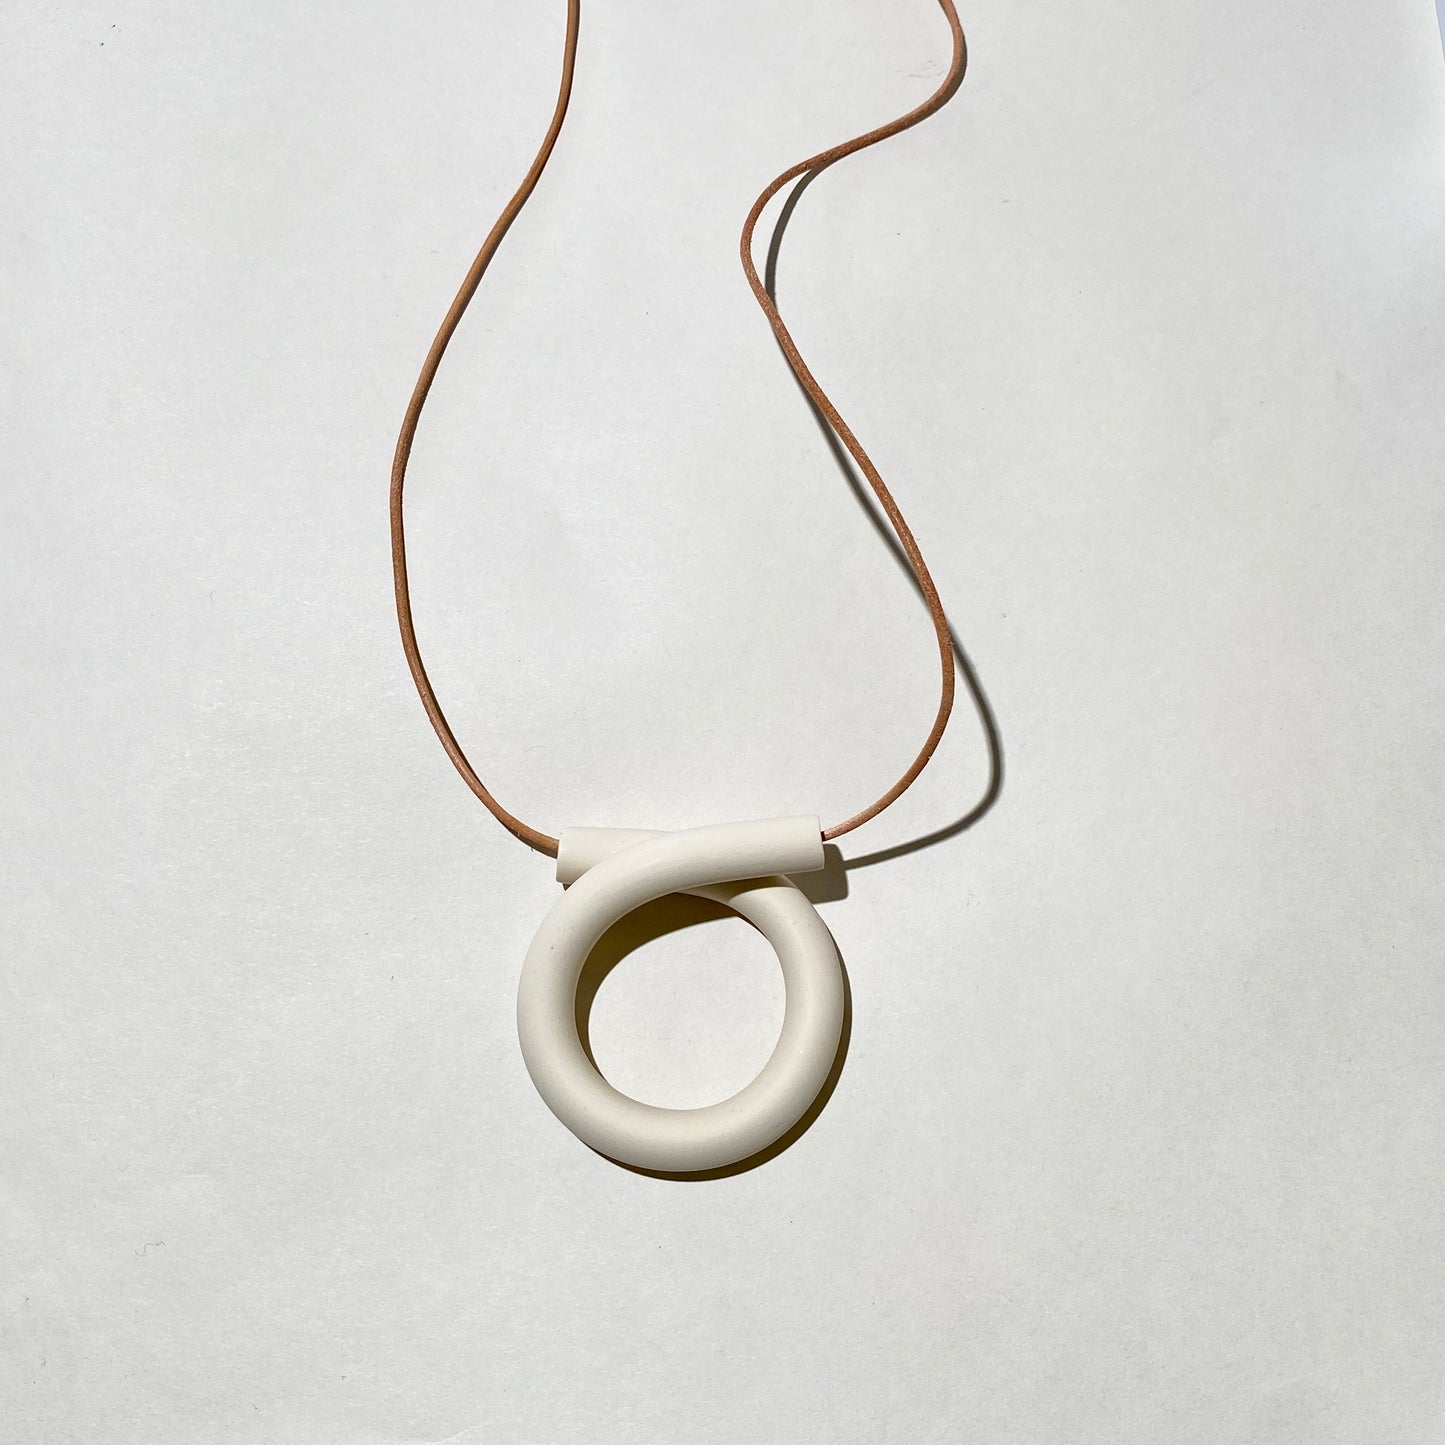 Loop necklace seconds